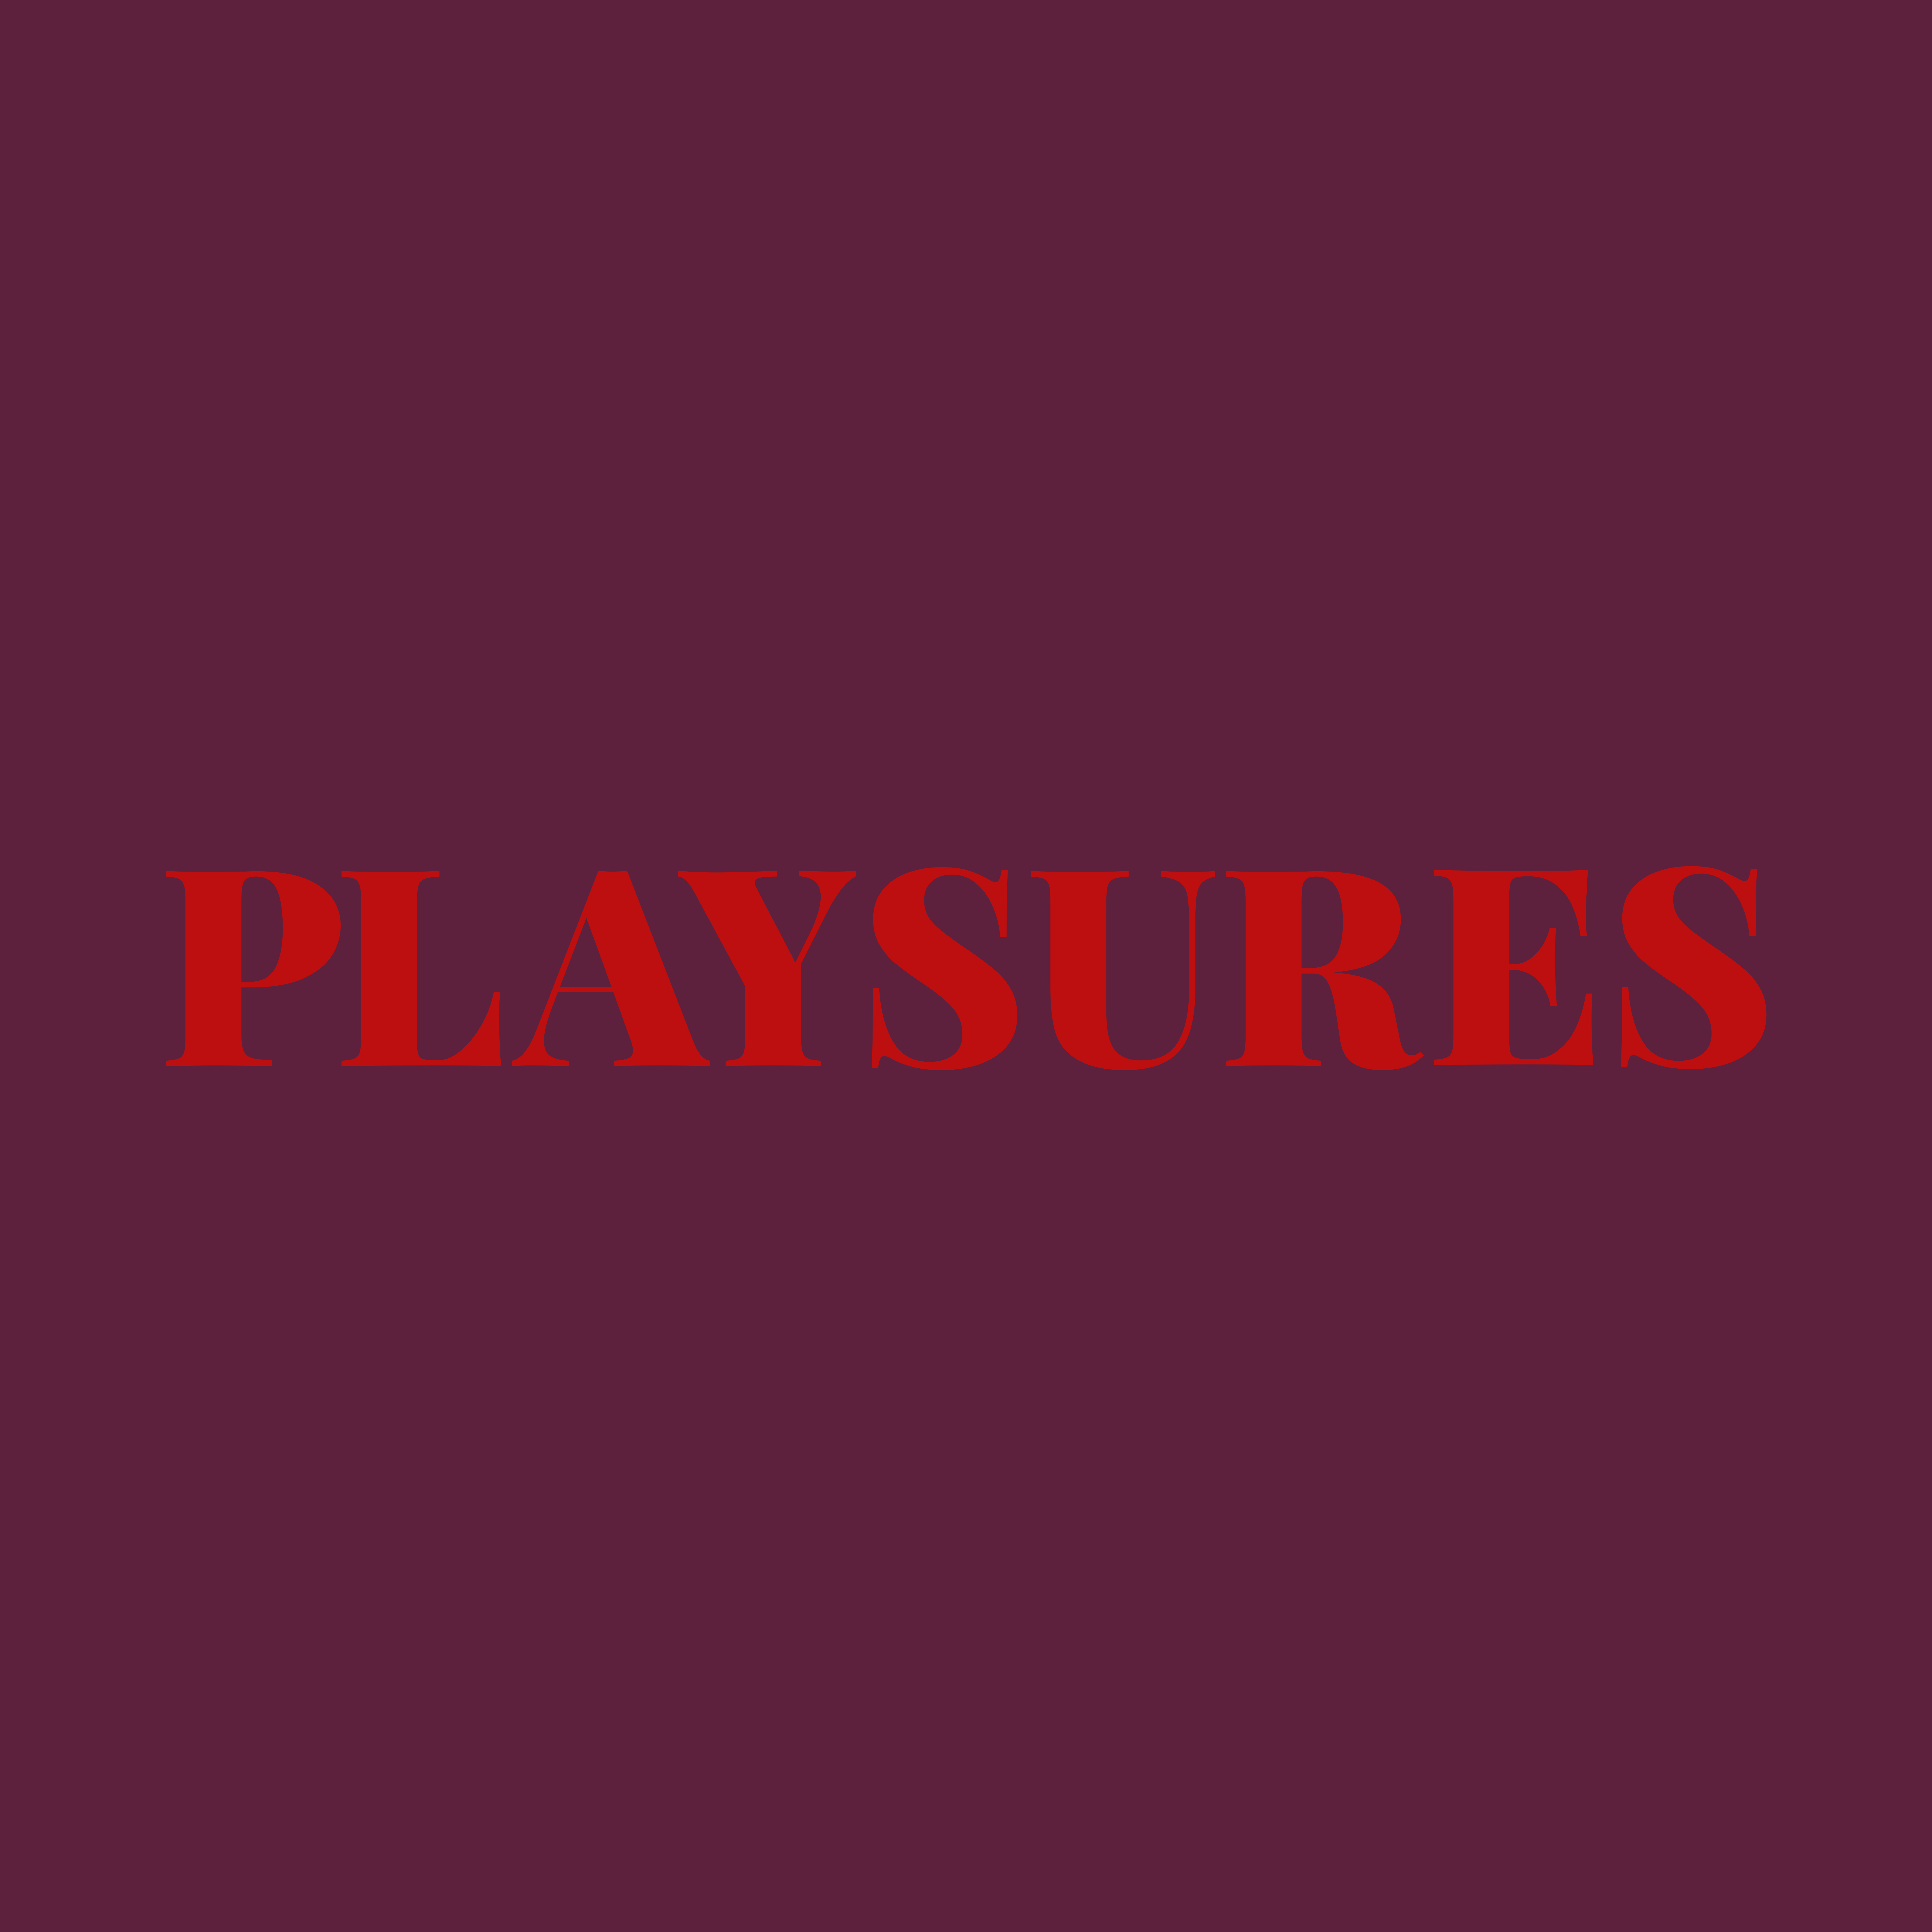 Playsures